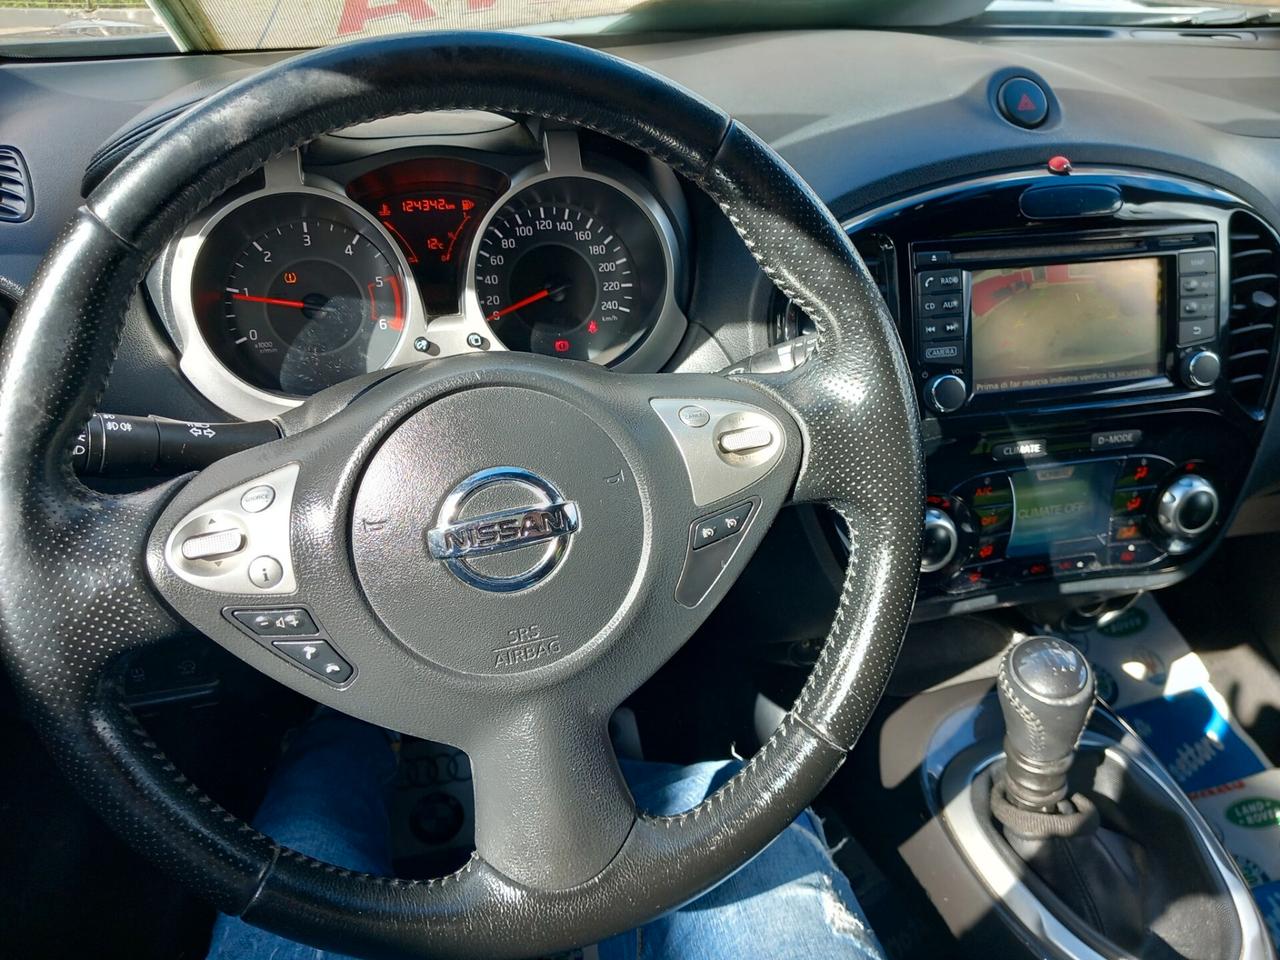 Nissan Juke 1.5 dCi Start&Stop Tekna navi retrocamera garanzia totale km 124000